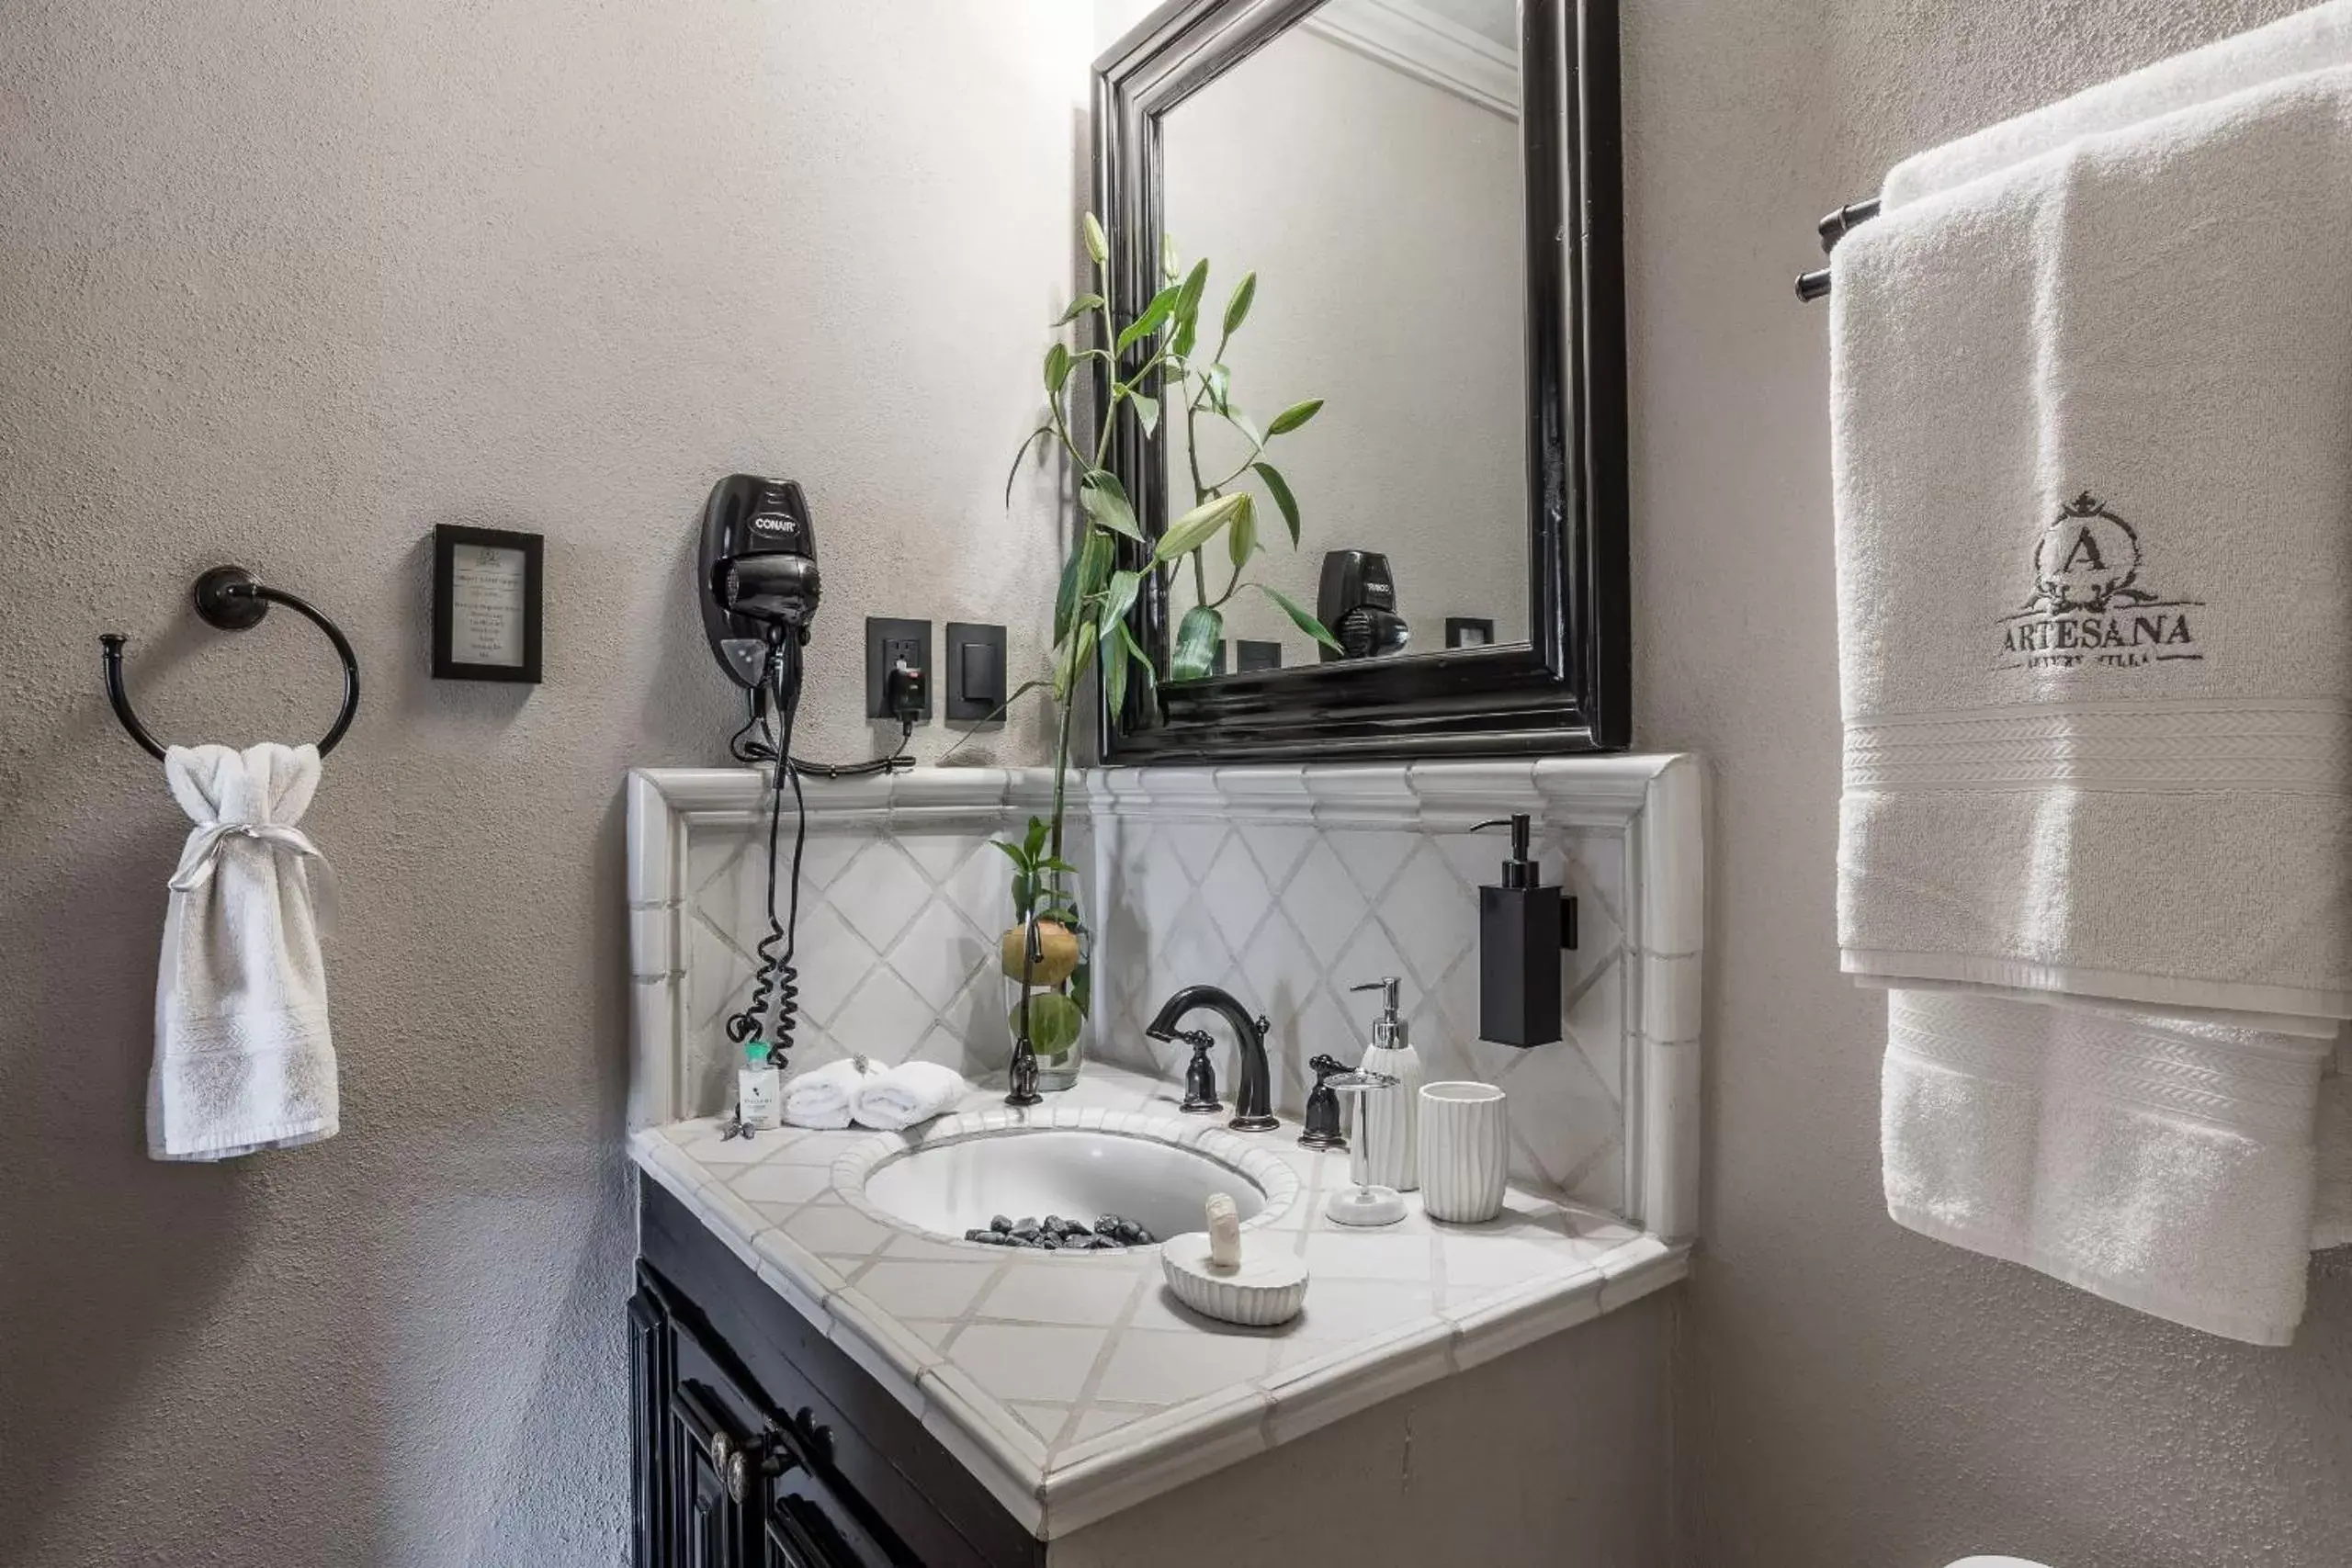 Bathroom in Artesana Luxury Villa